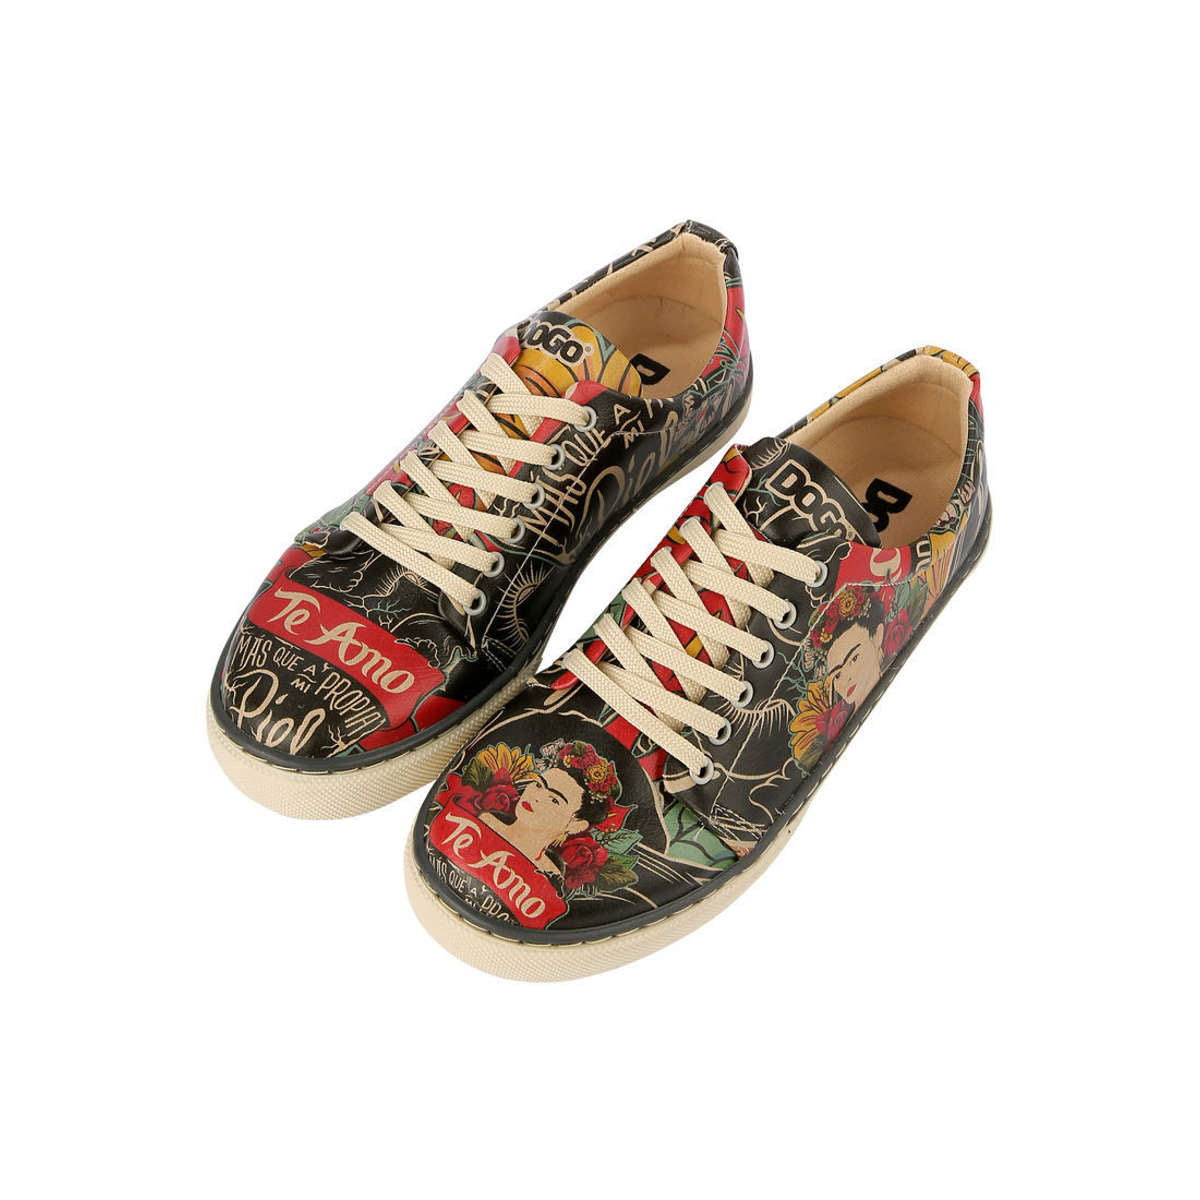 DOGO SHOES - Te Amo Sneaker Frida Kahlo – Mosaic Fashion